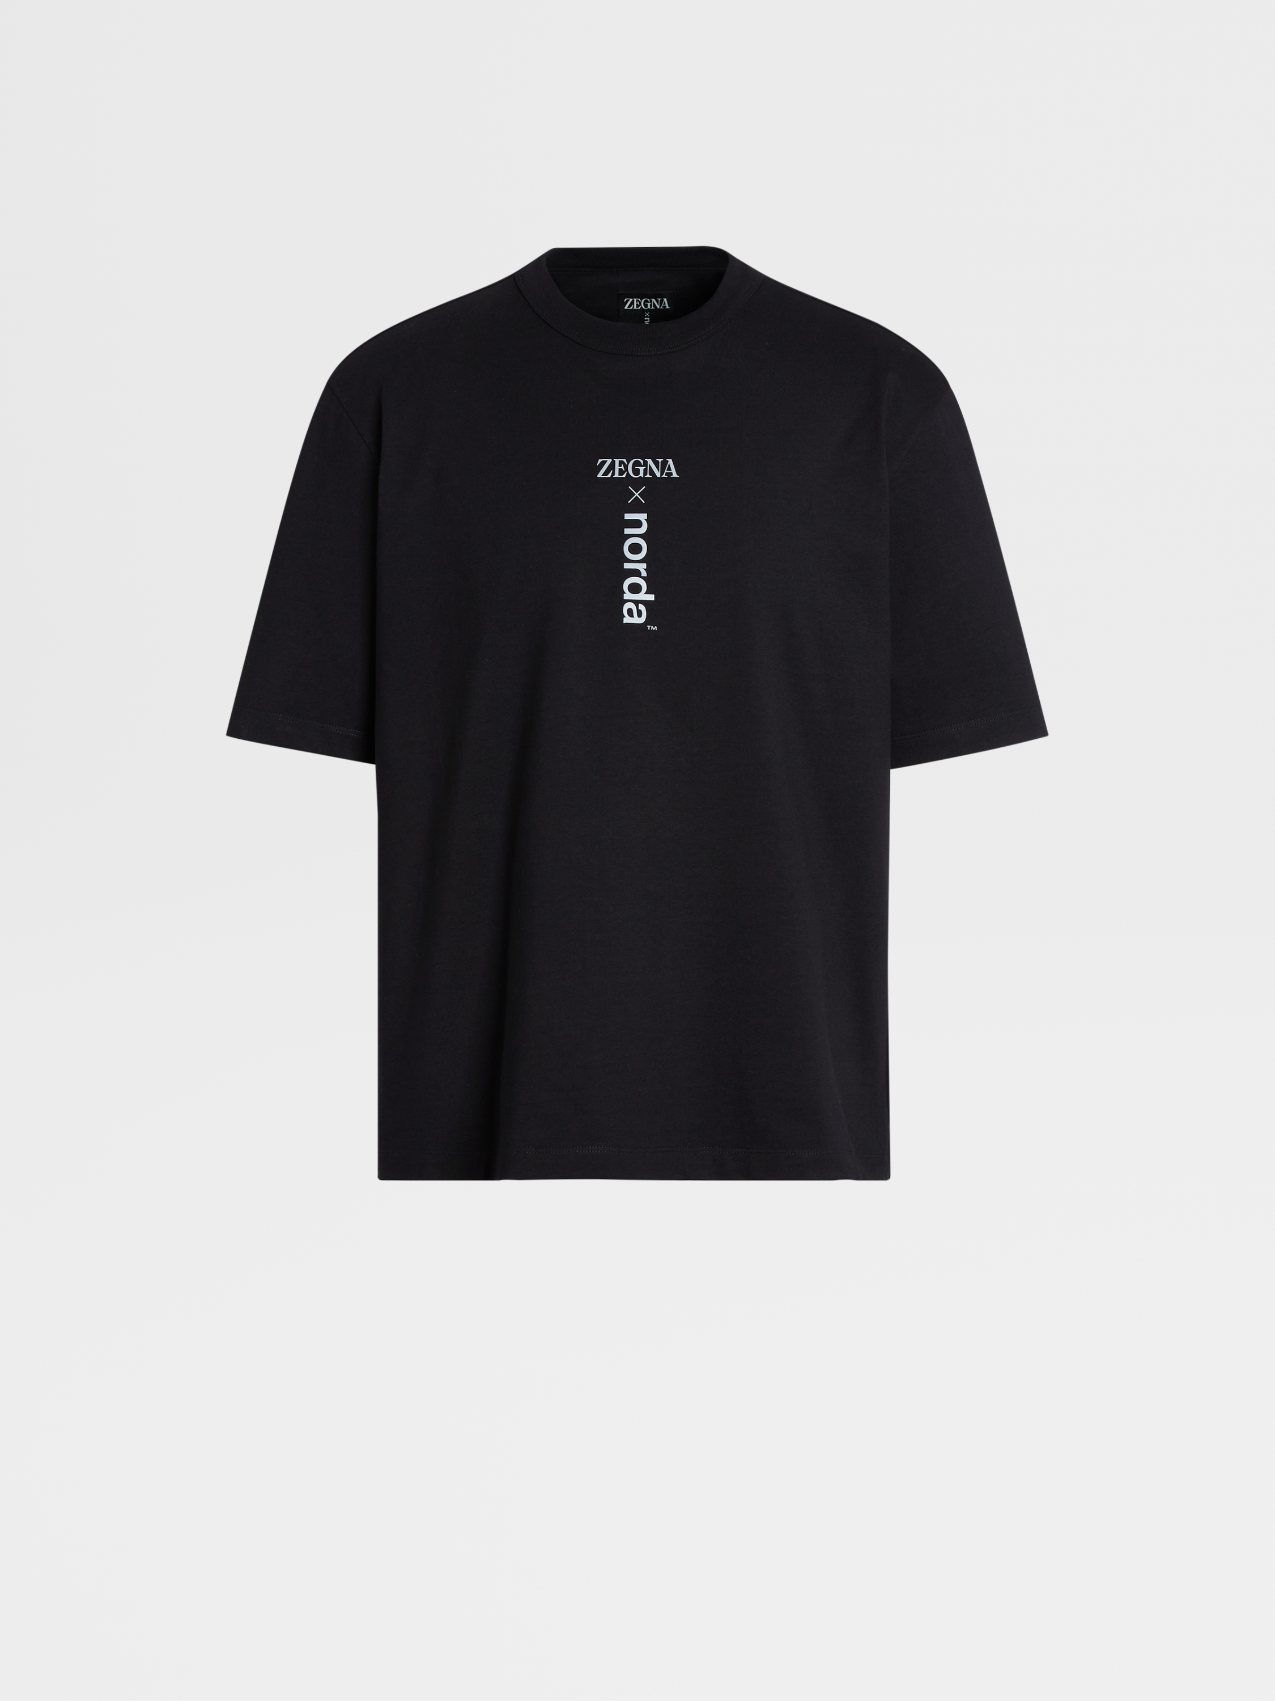 ZEGNA x norda™ Black #UseTheExisting™ Cotton T-shirt